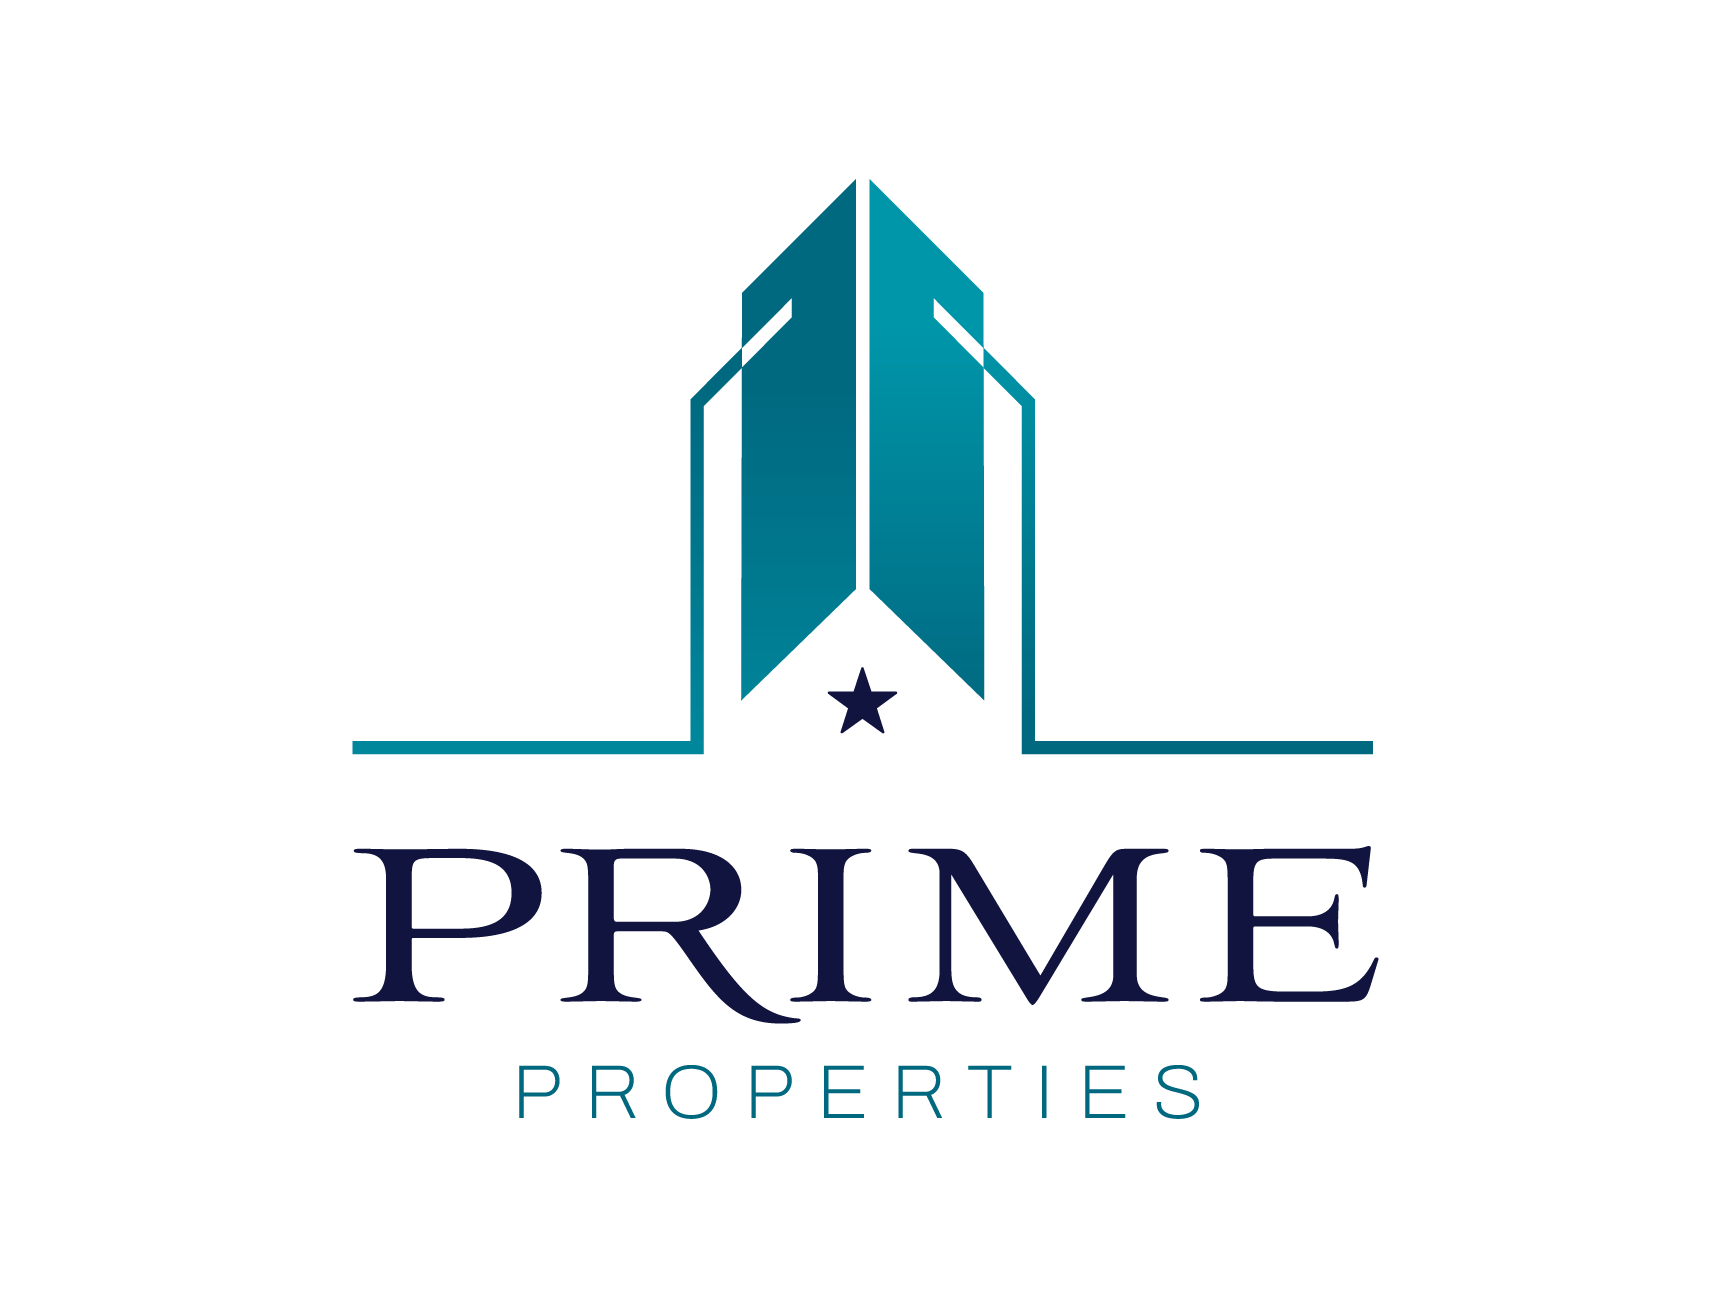 Prime Properties logo